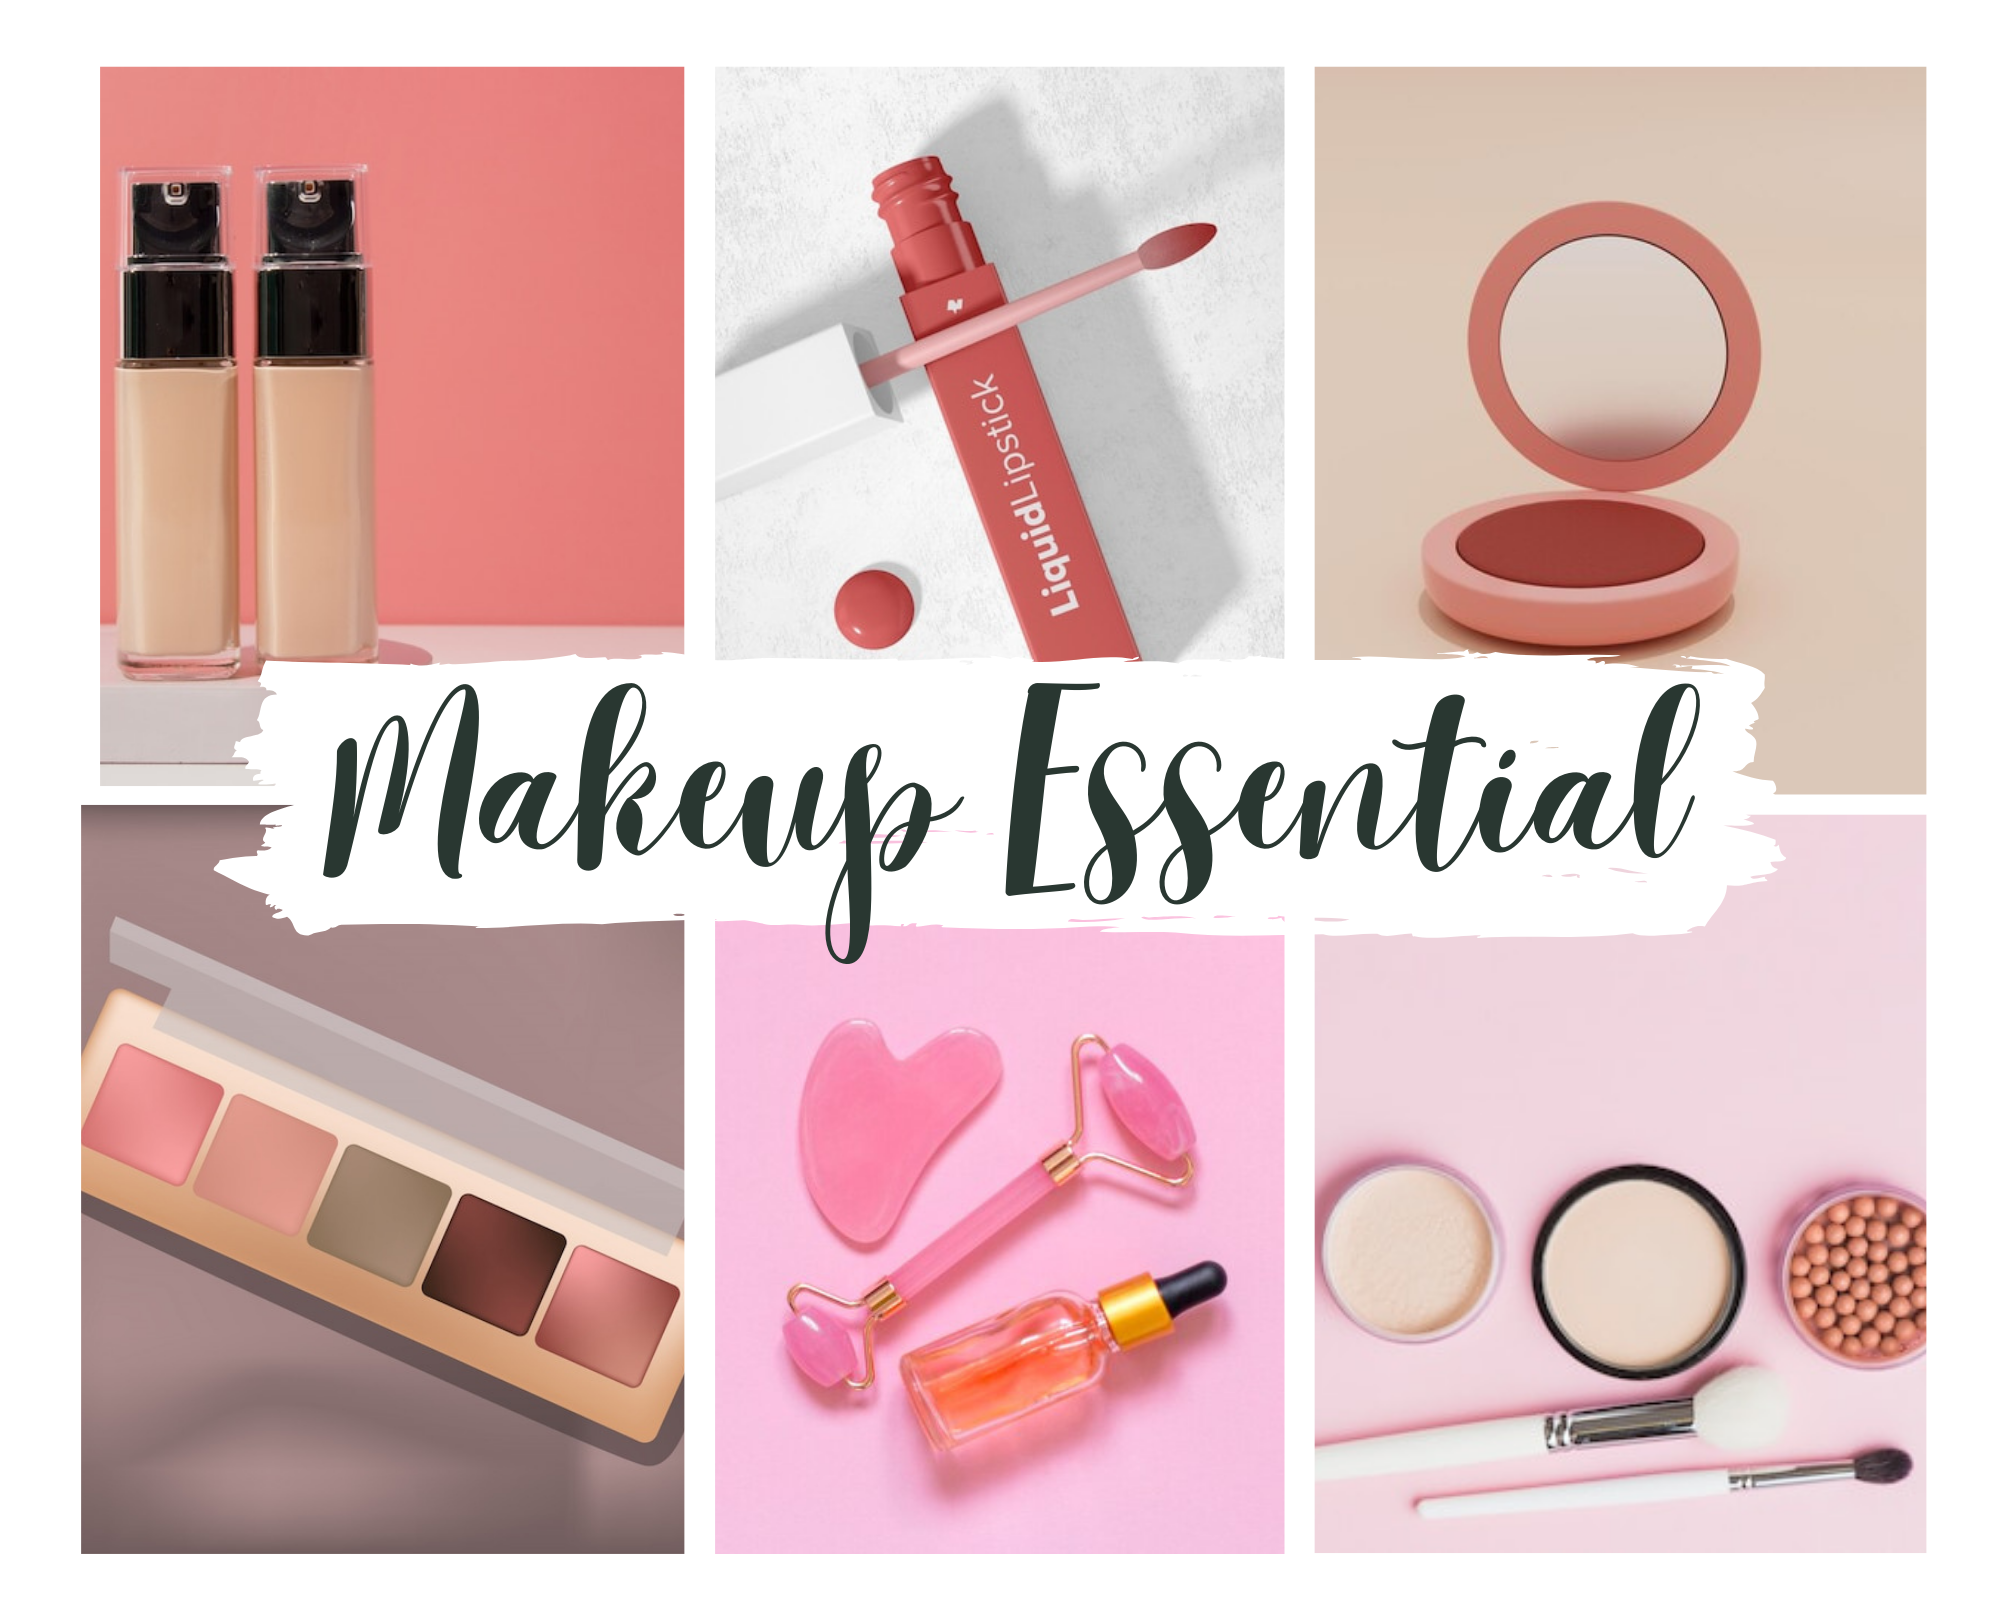 Basic makeup essentials that everyone needs